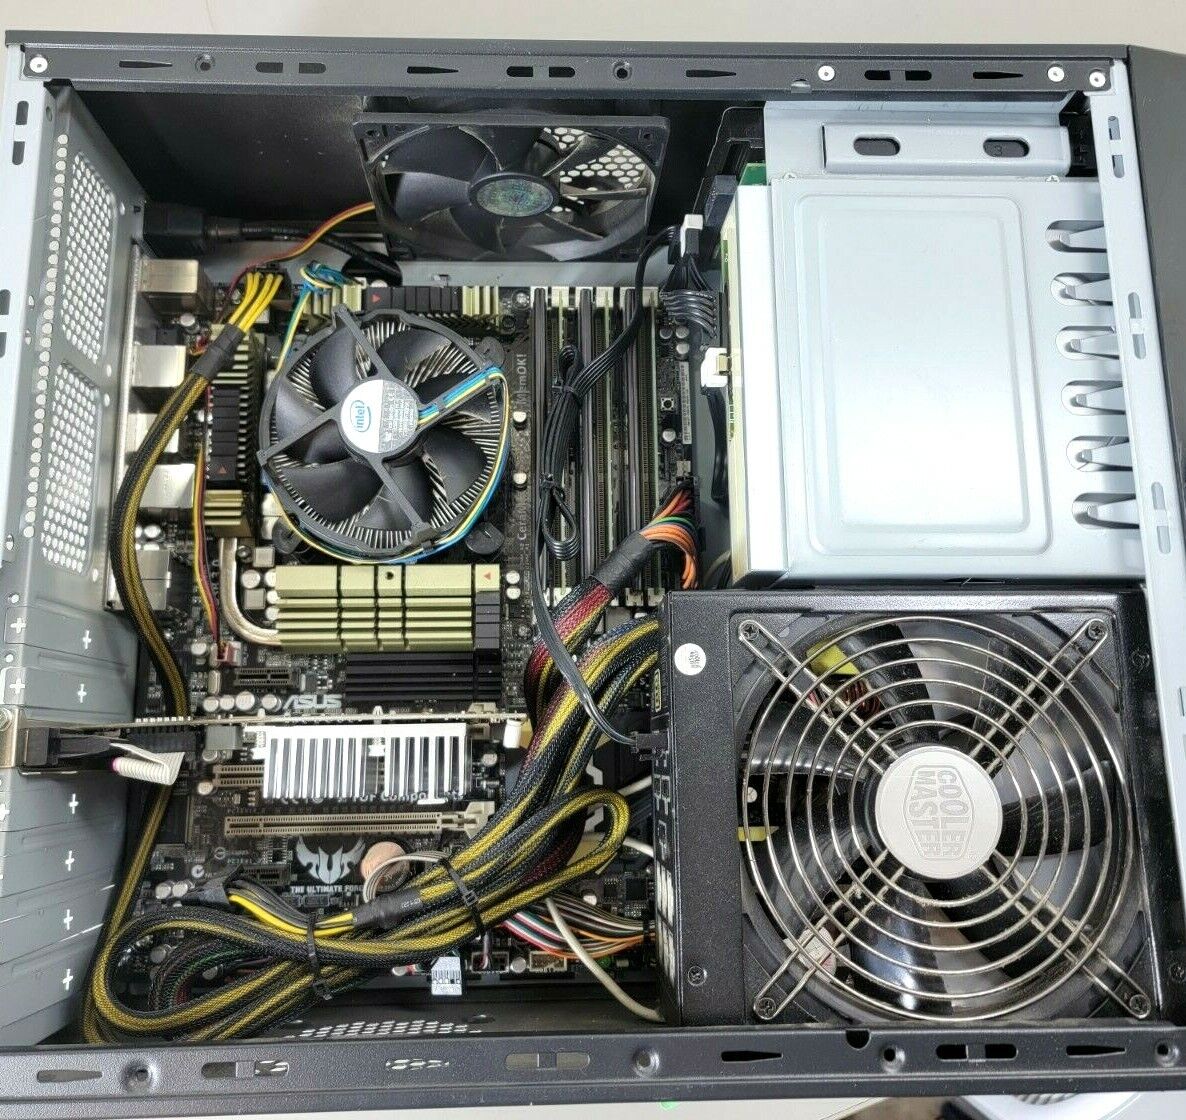 Cooler Master Desktop Computer i7 3.07Ghz, 12GB, Mid Tower, W10, 1TB,  Radeon HD